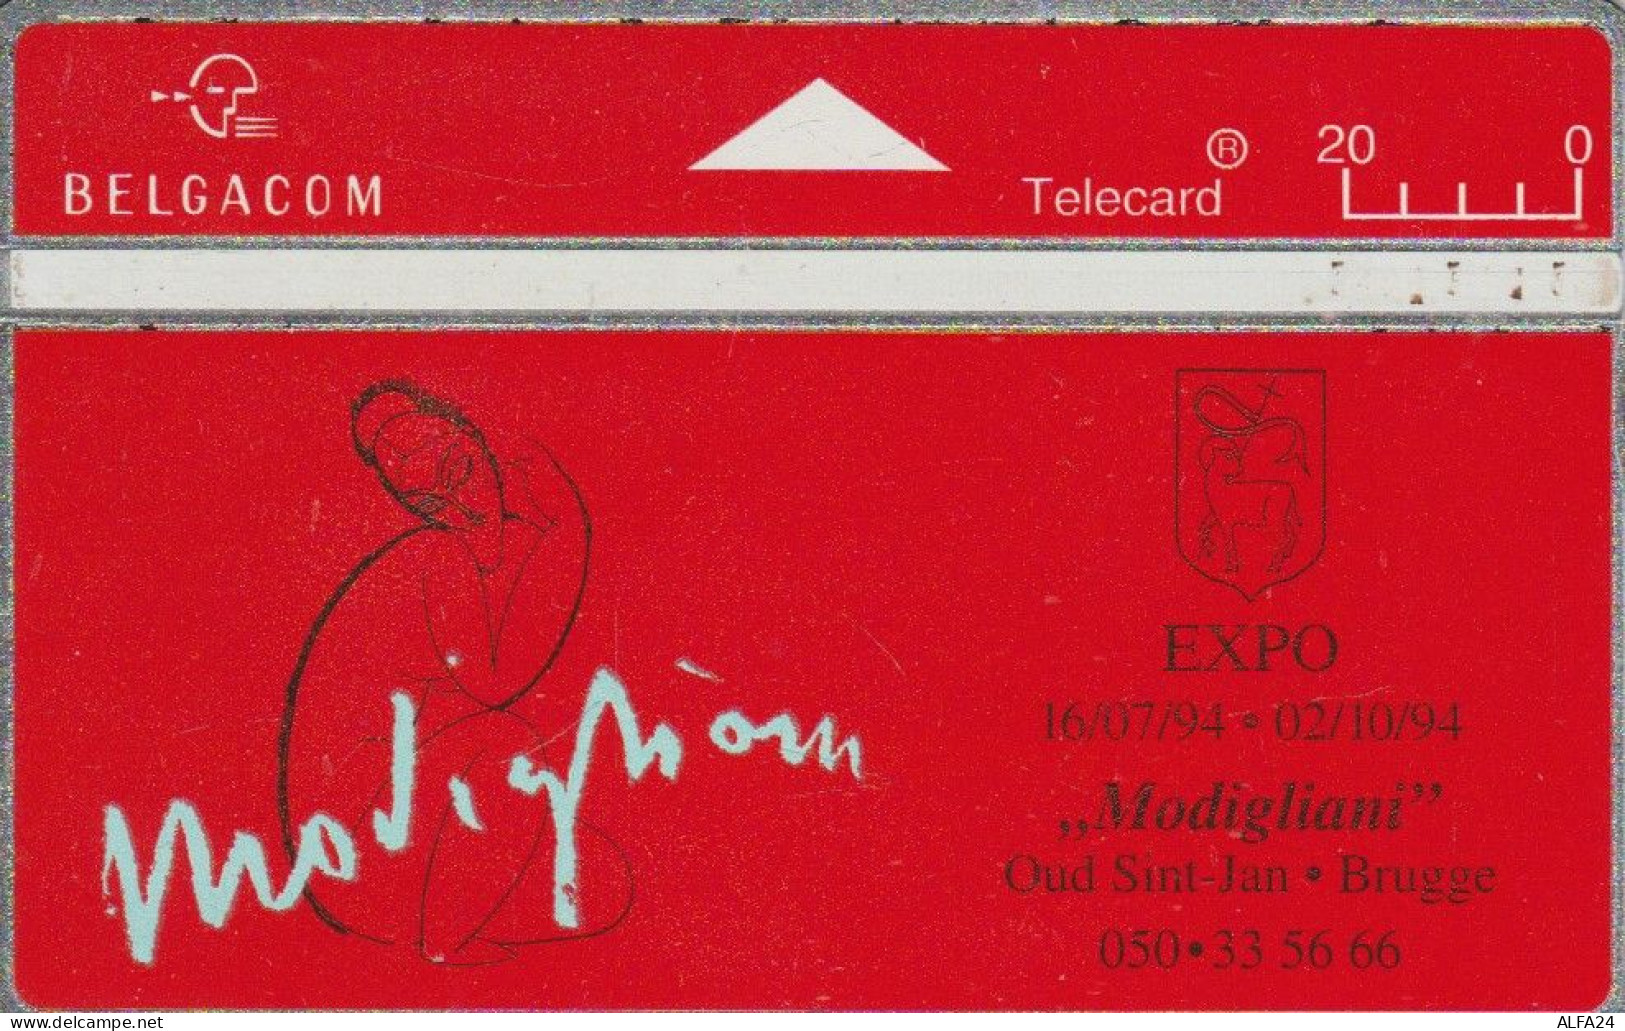 PHONE CARD BELGIO LANDIS (CK5995 - Senza Chip